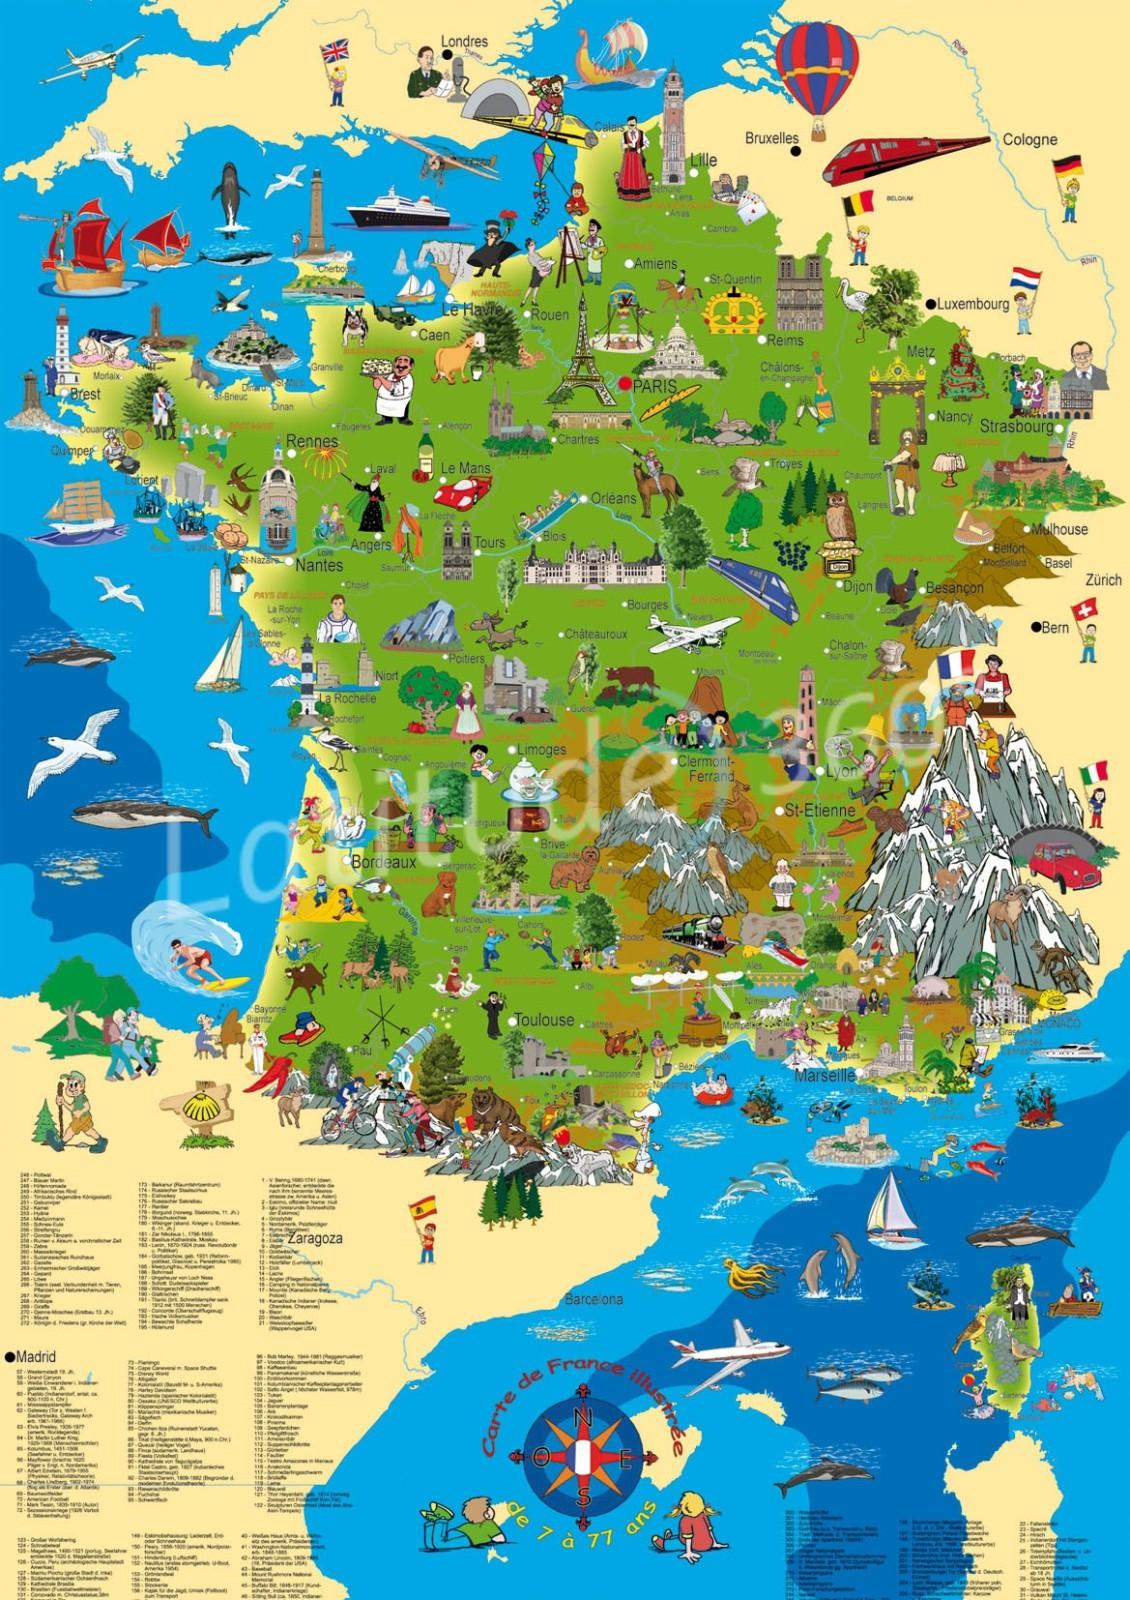 tourism france map